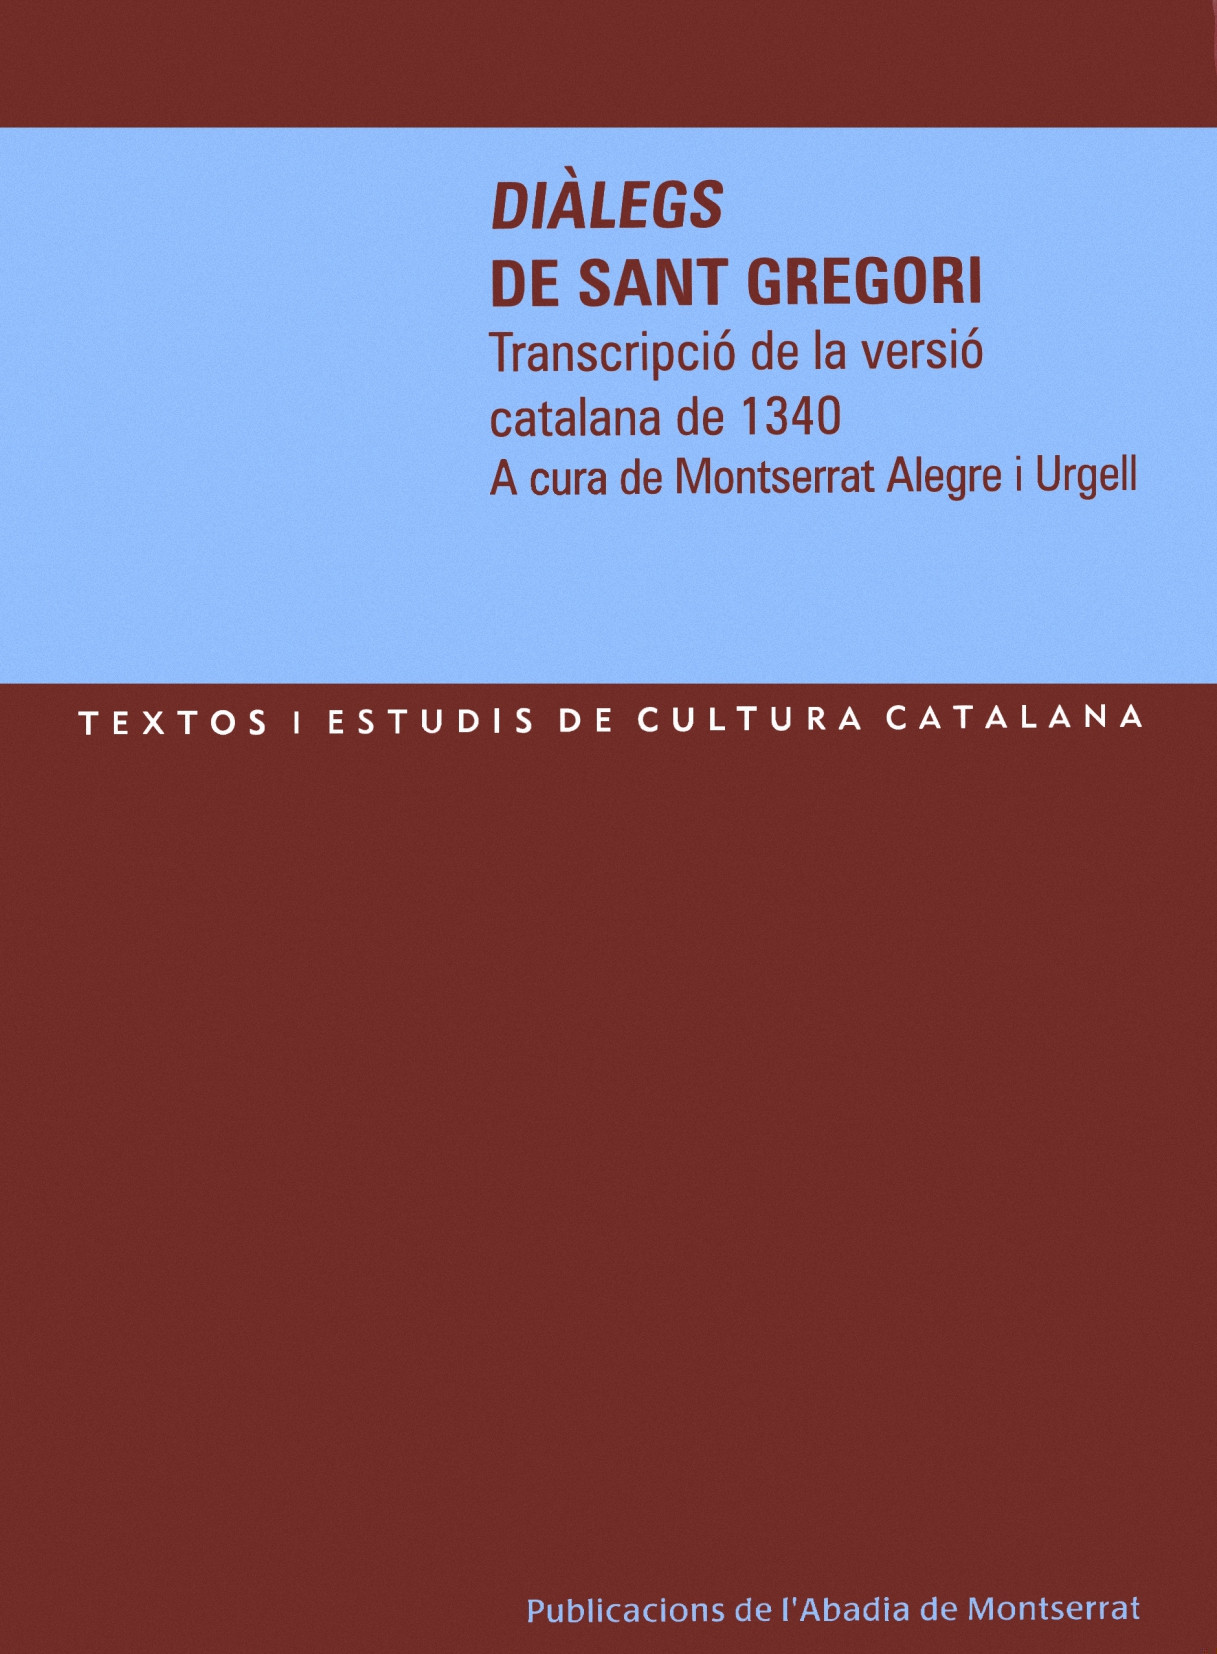 Montserrat Alegre i Urgell